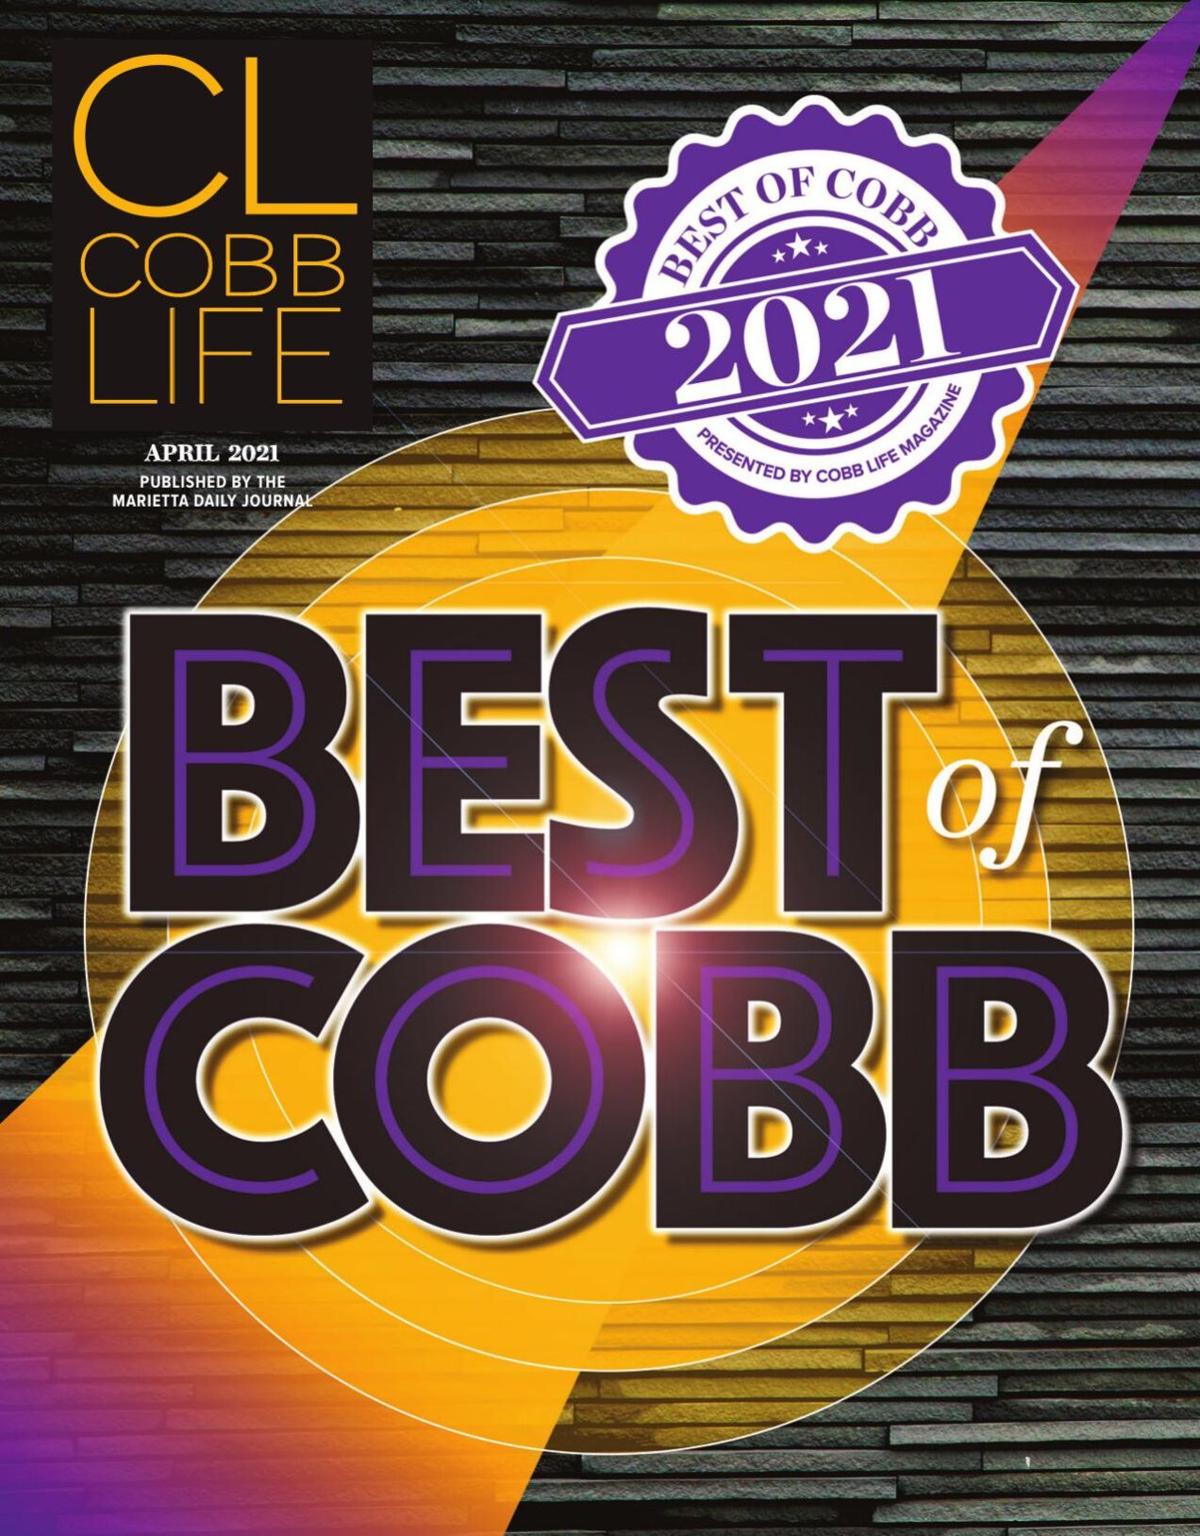 The Best of Cobb April 2021 Cobb Life Magazine